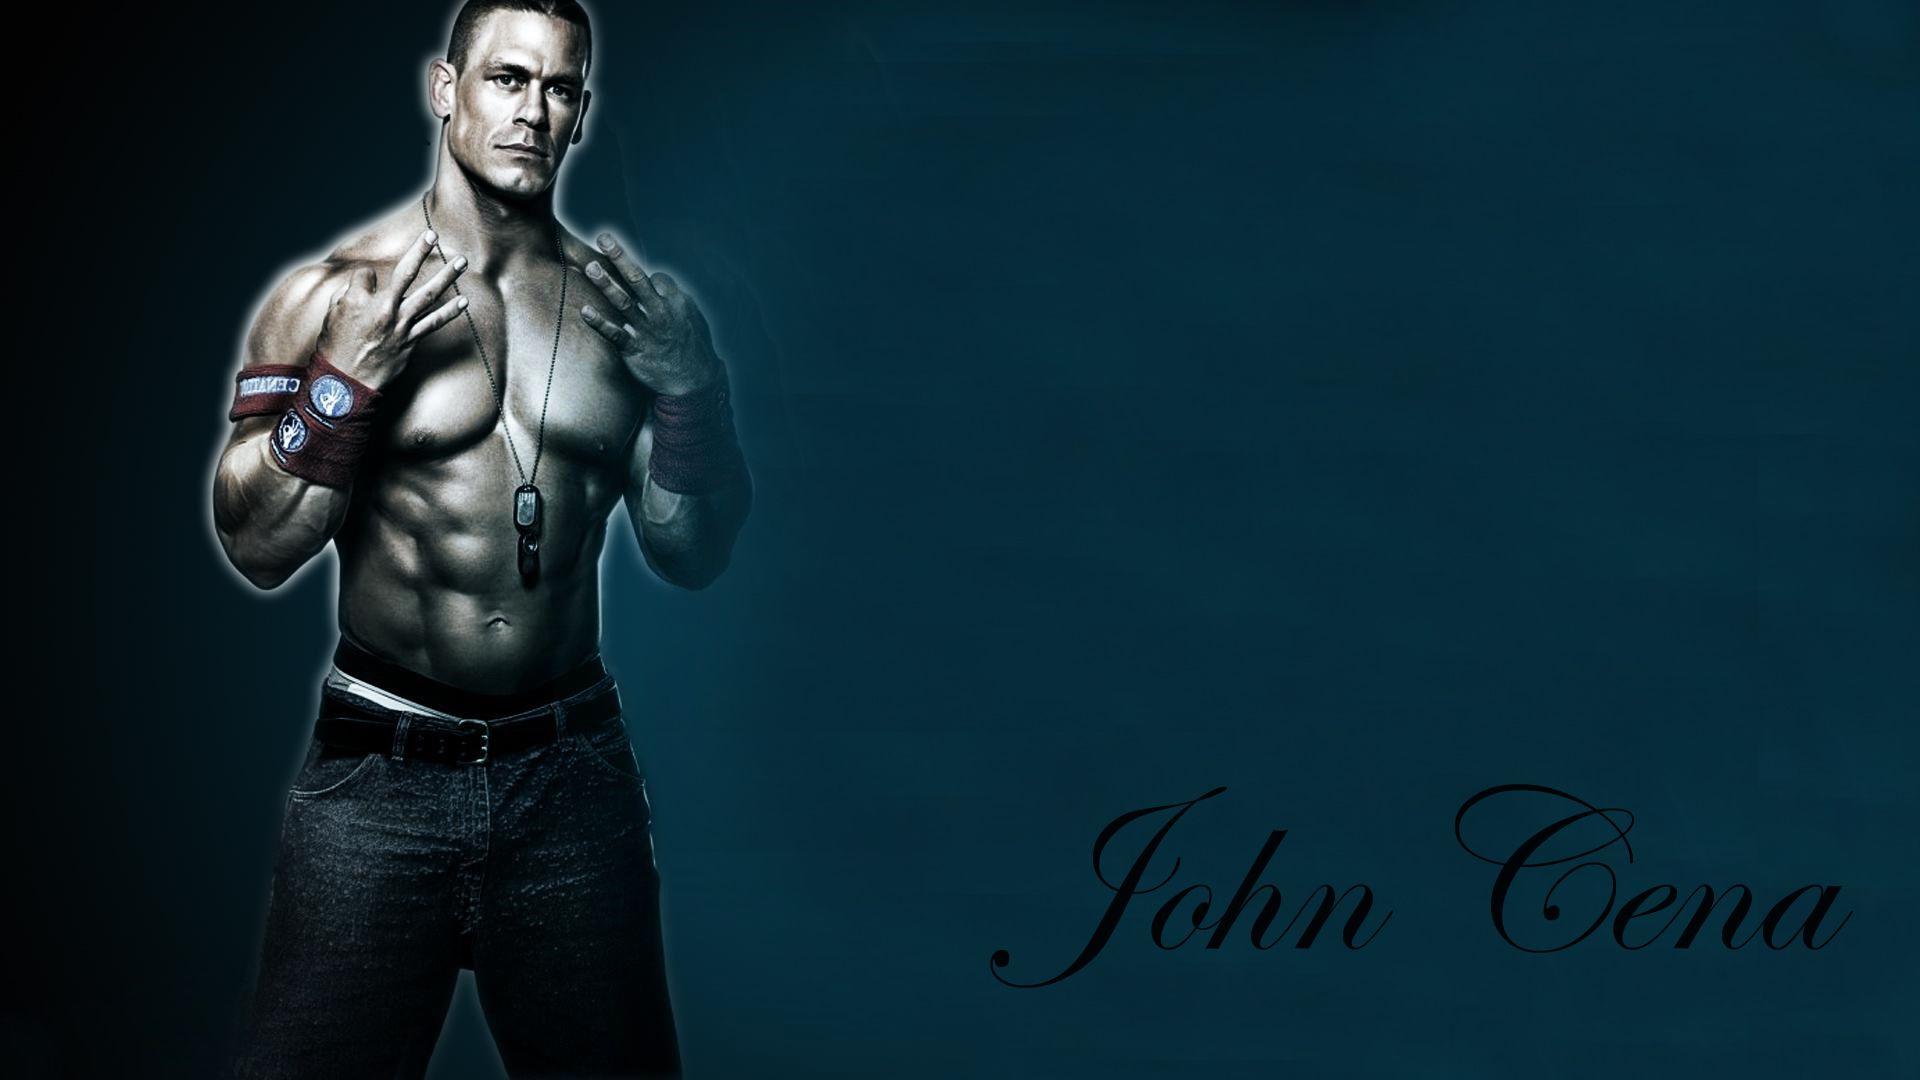 John Cena Photo Wallpaper HD Wallpaper